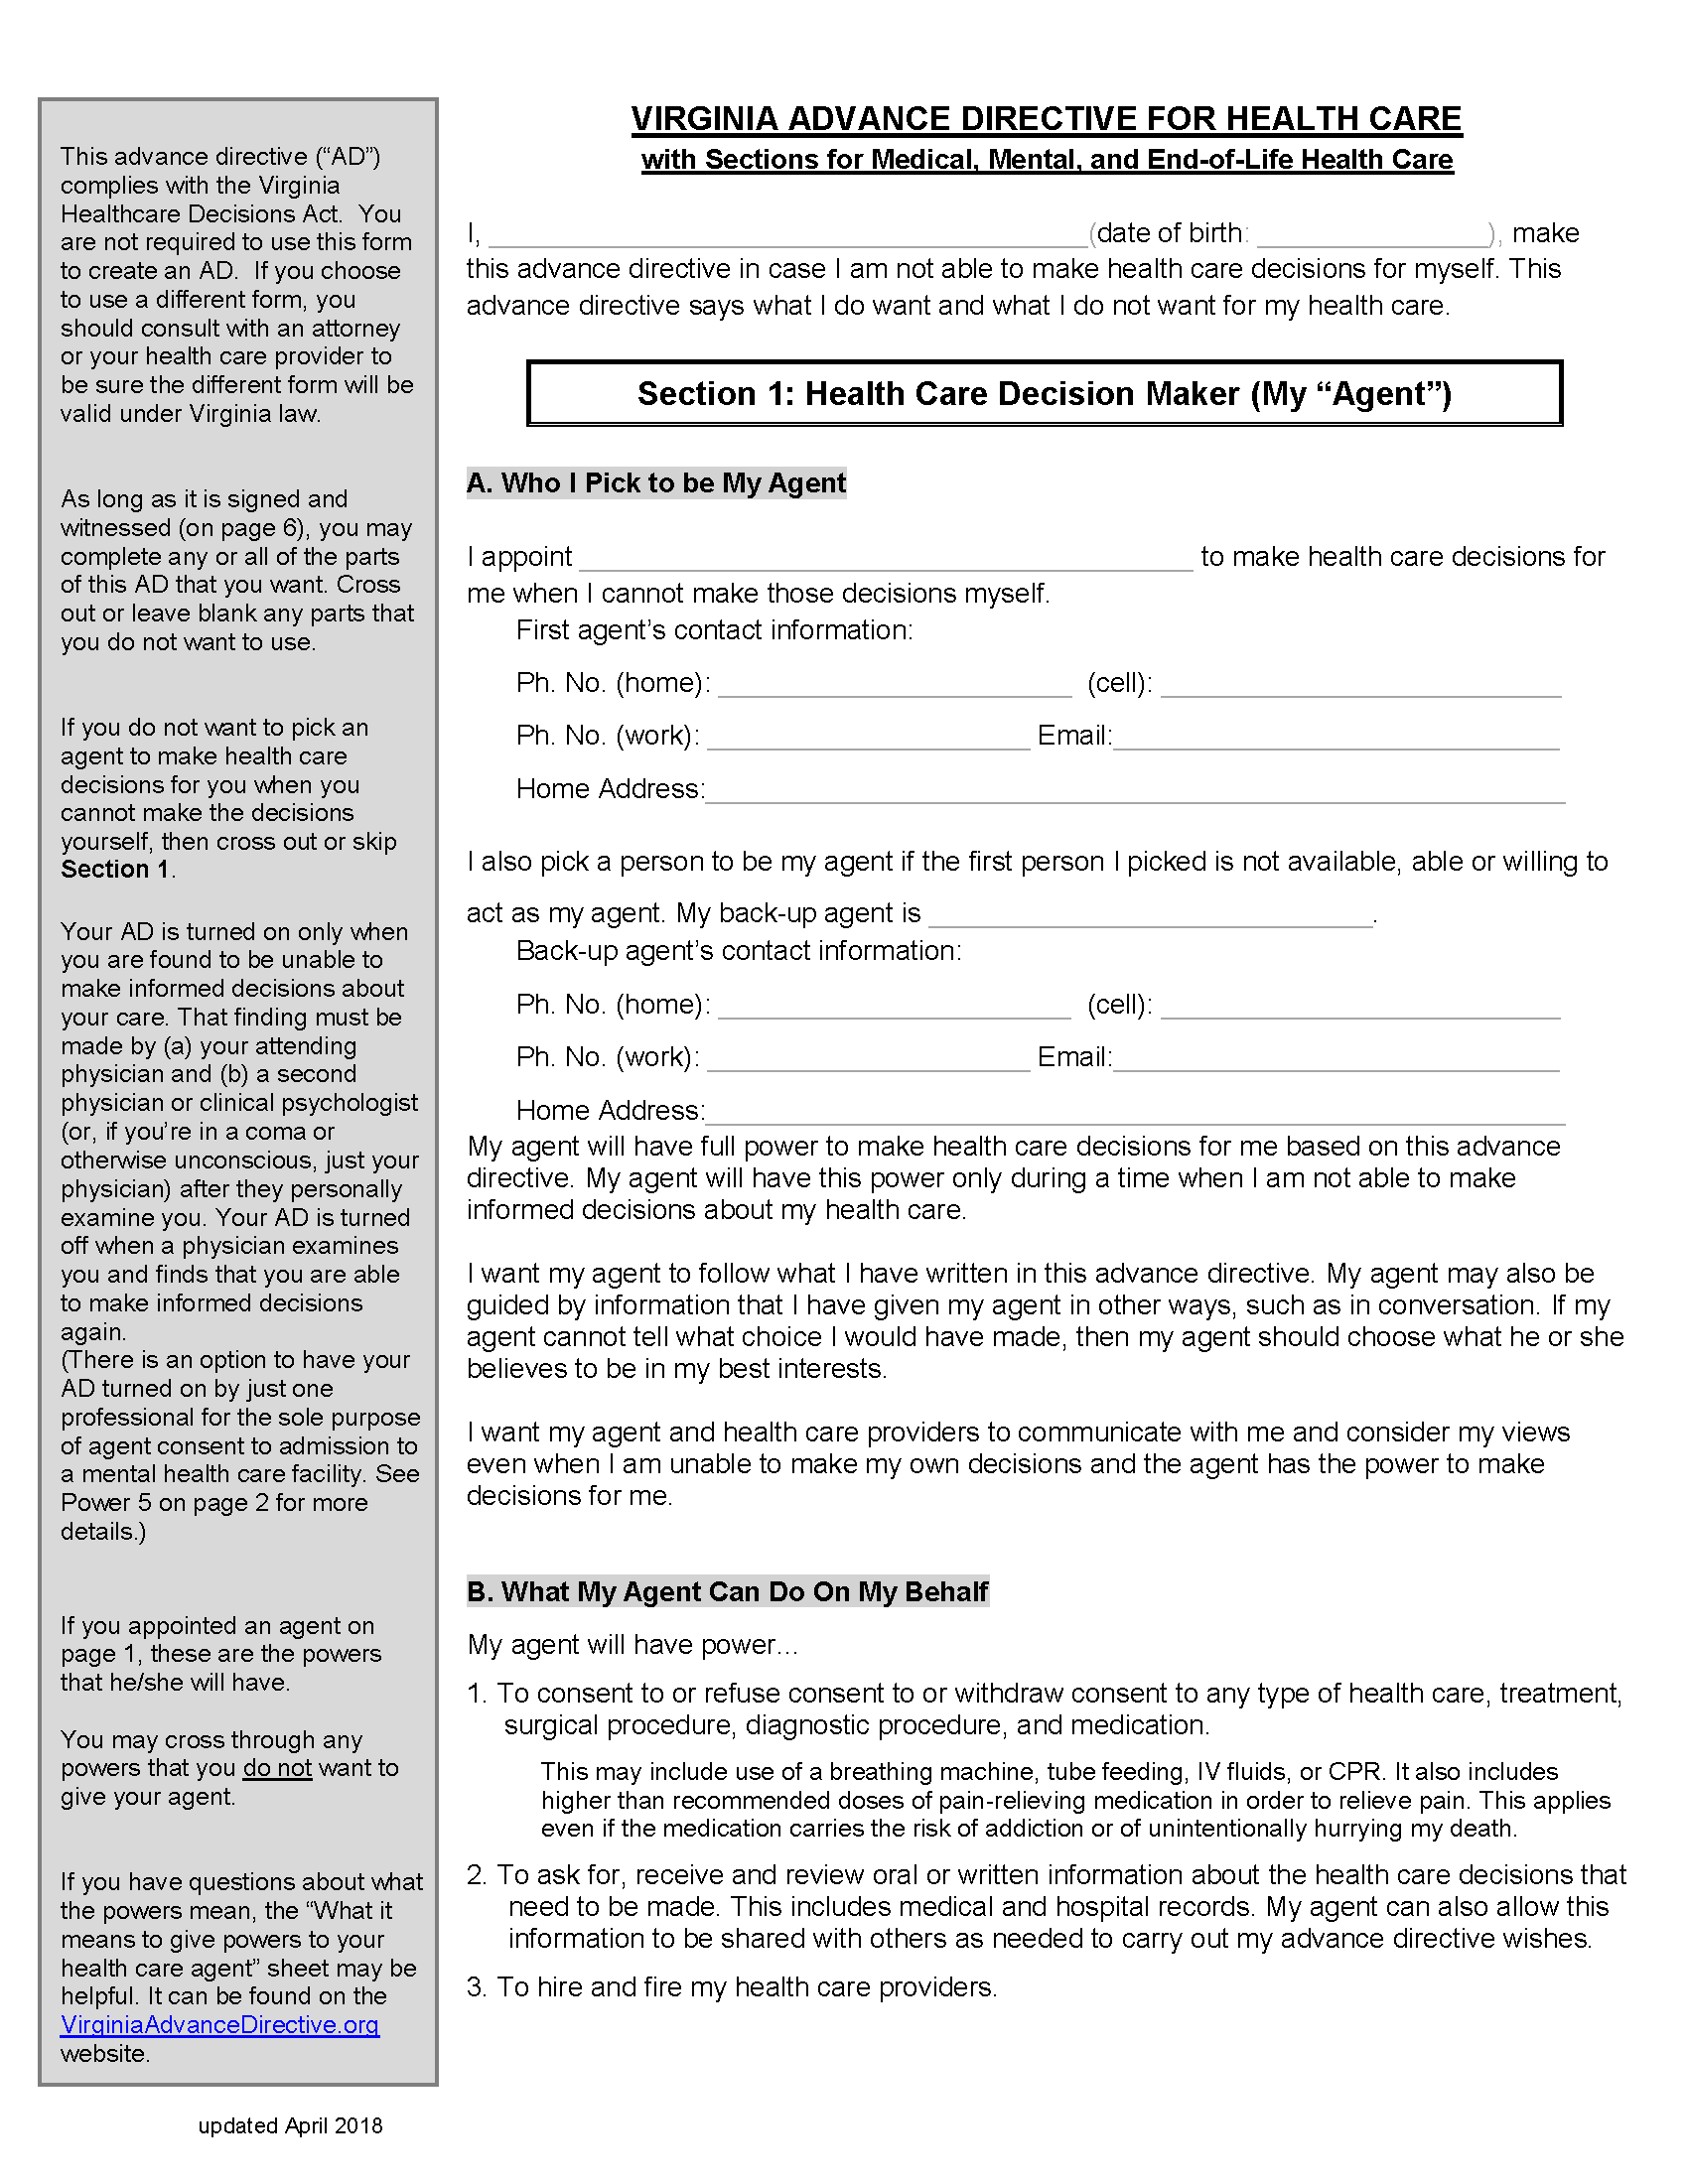 free-virginia-advance-directive-form-pdf